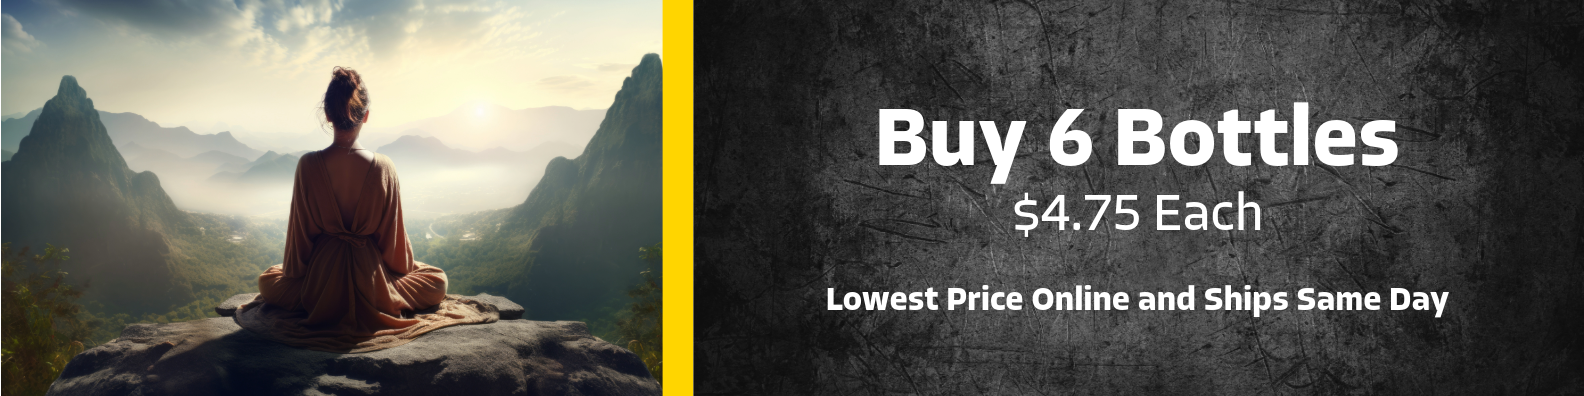 buy nirvana mood boost lowest price